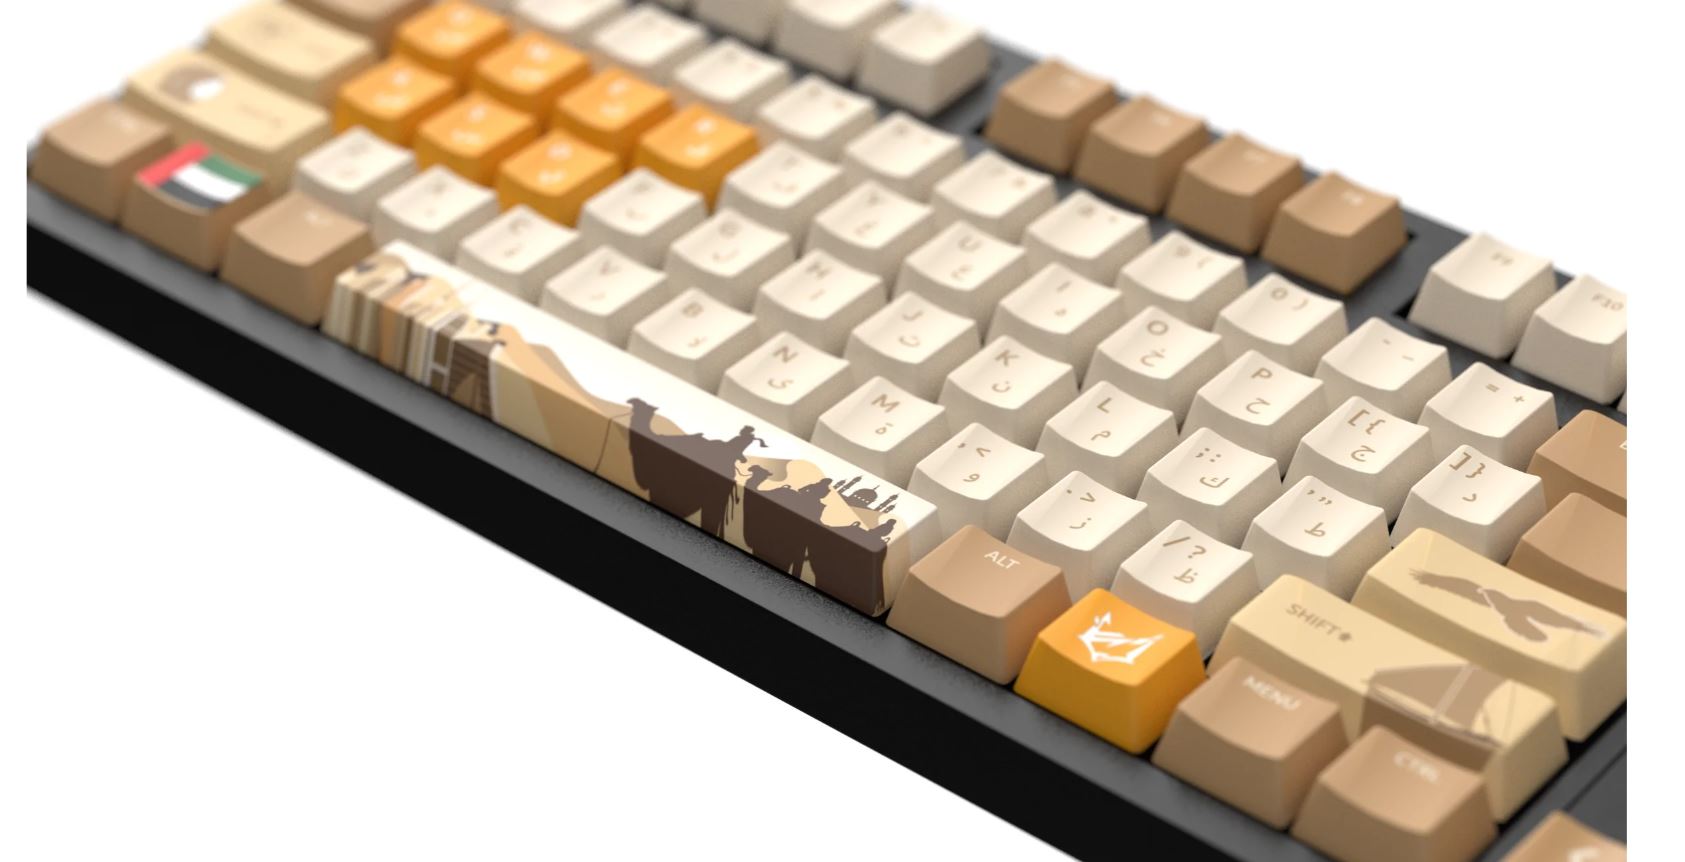 Mirage 87 - UAE Limited Edition Gaming Keyboard